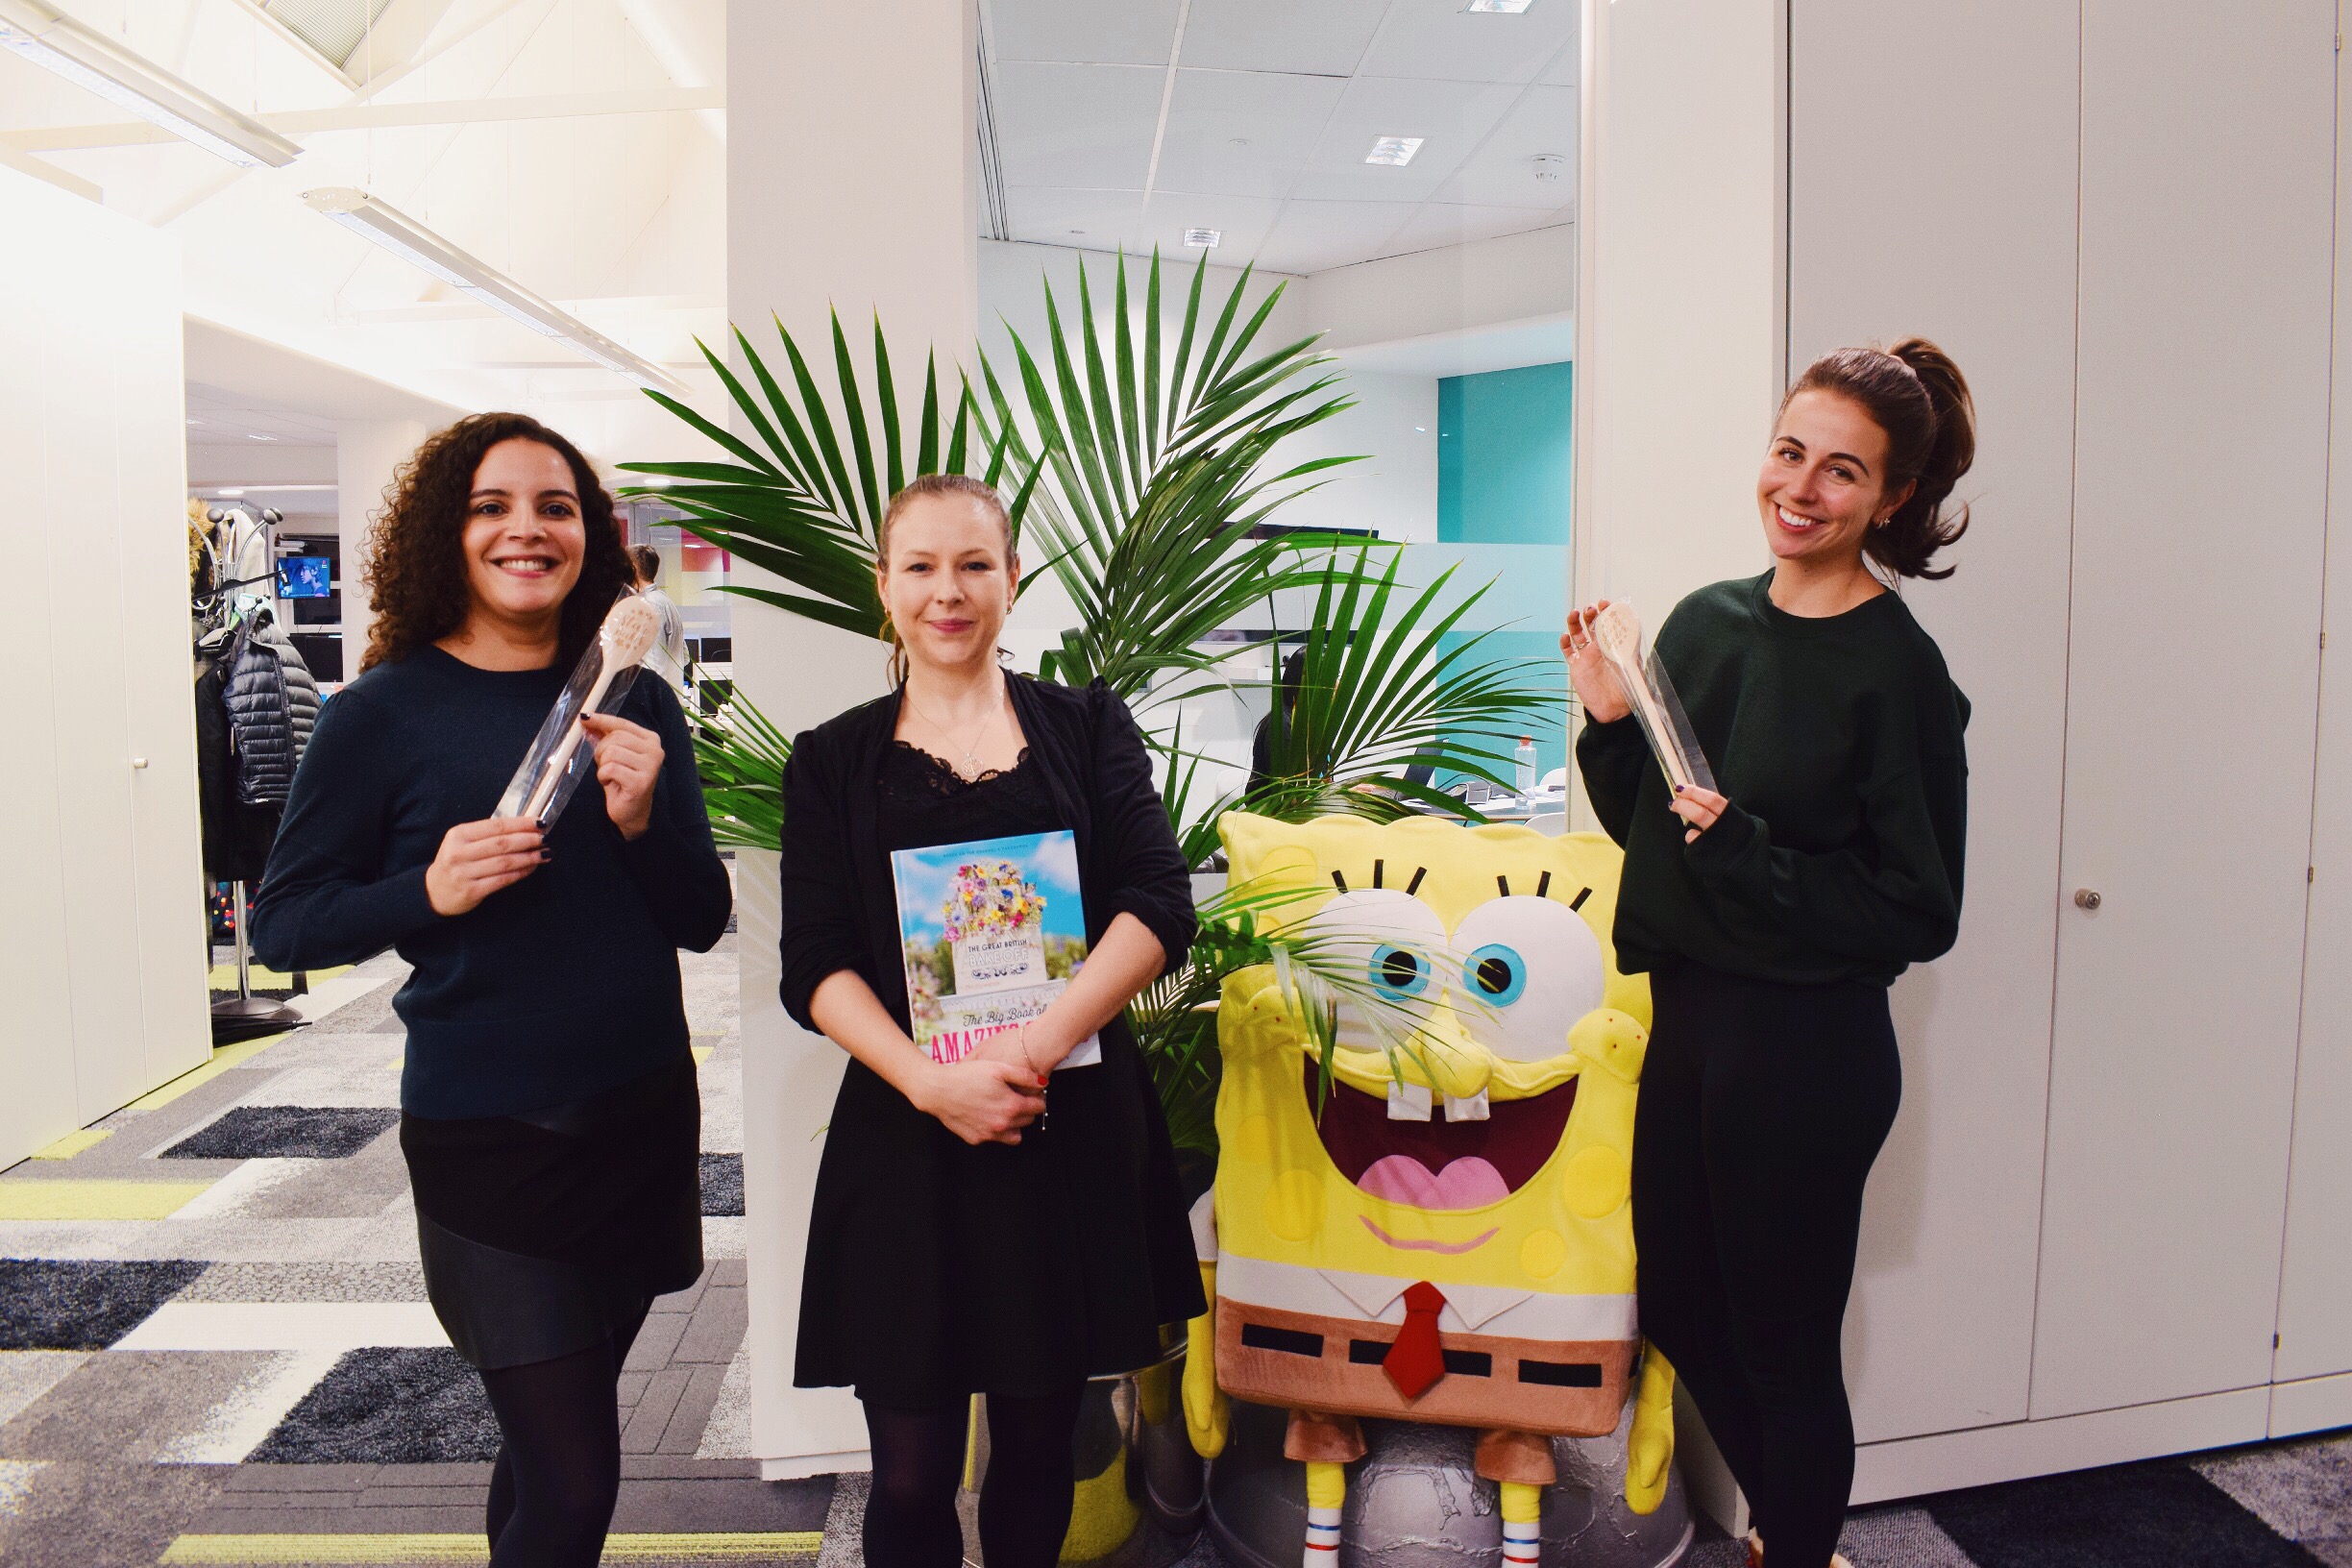 Paramount employees posing with Spongebob Squarepants